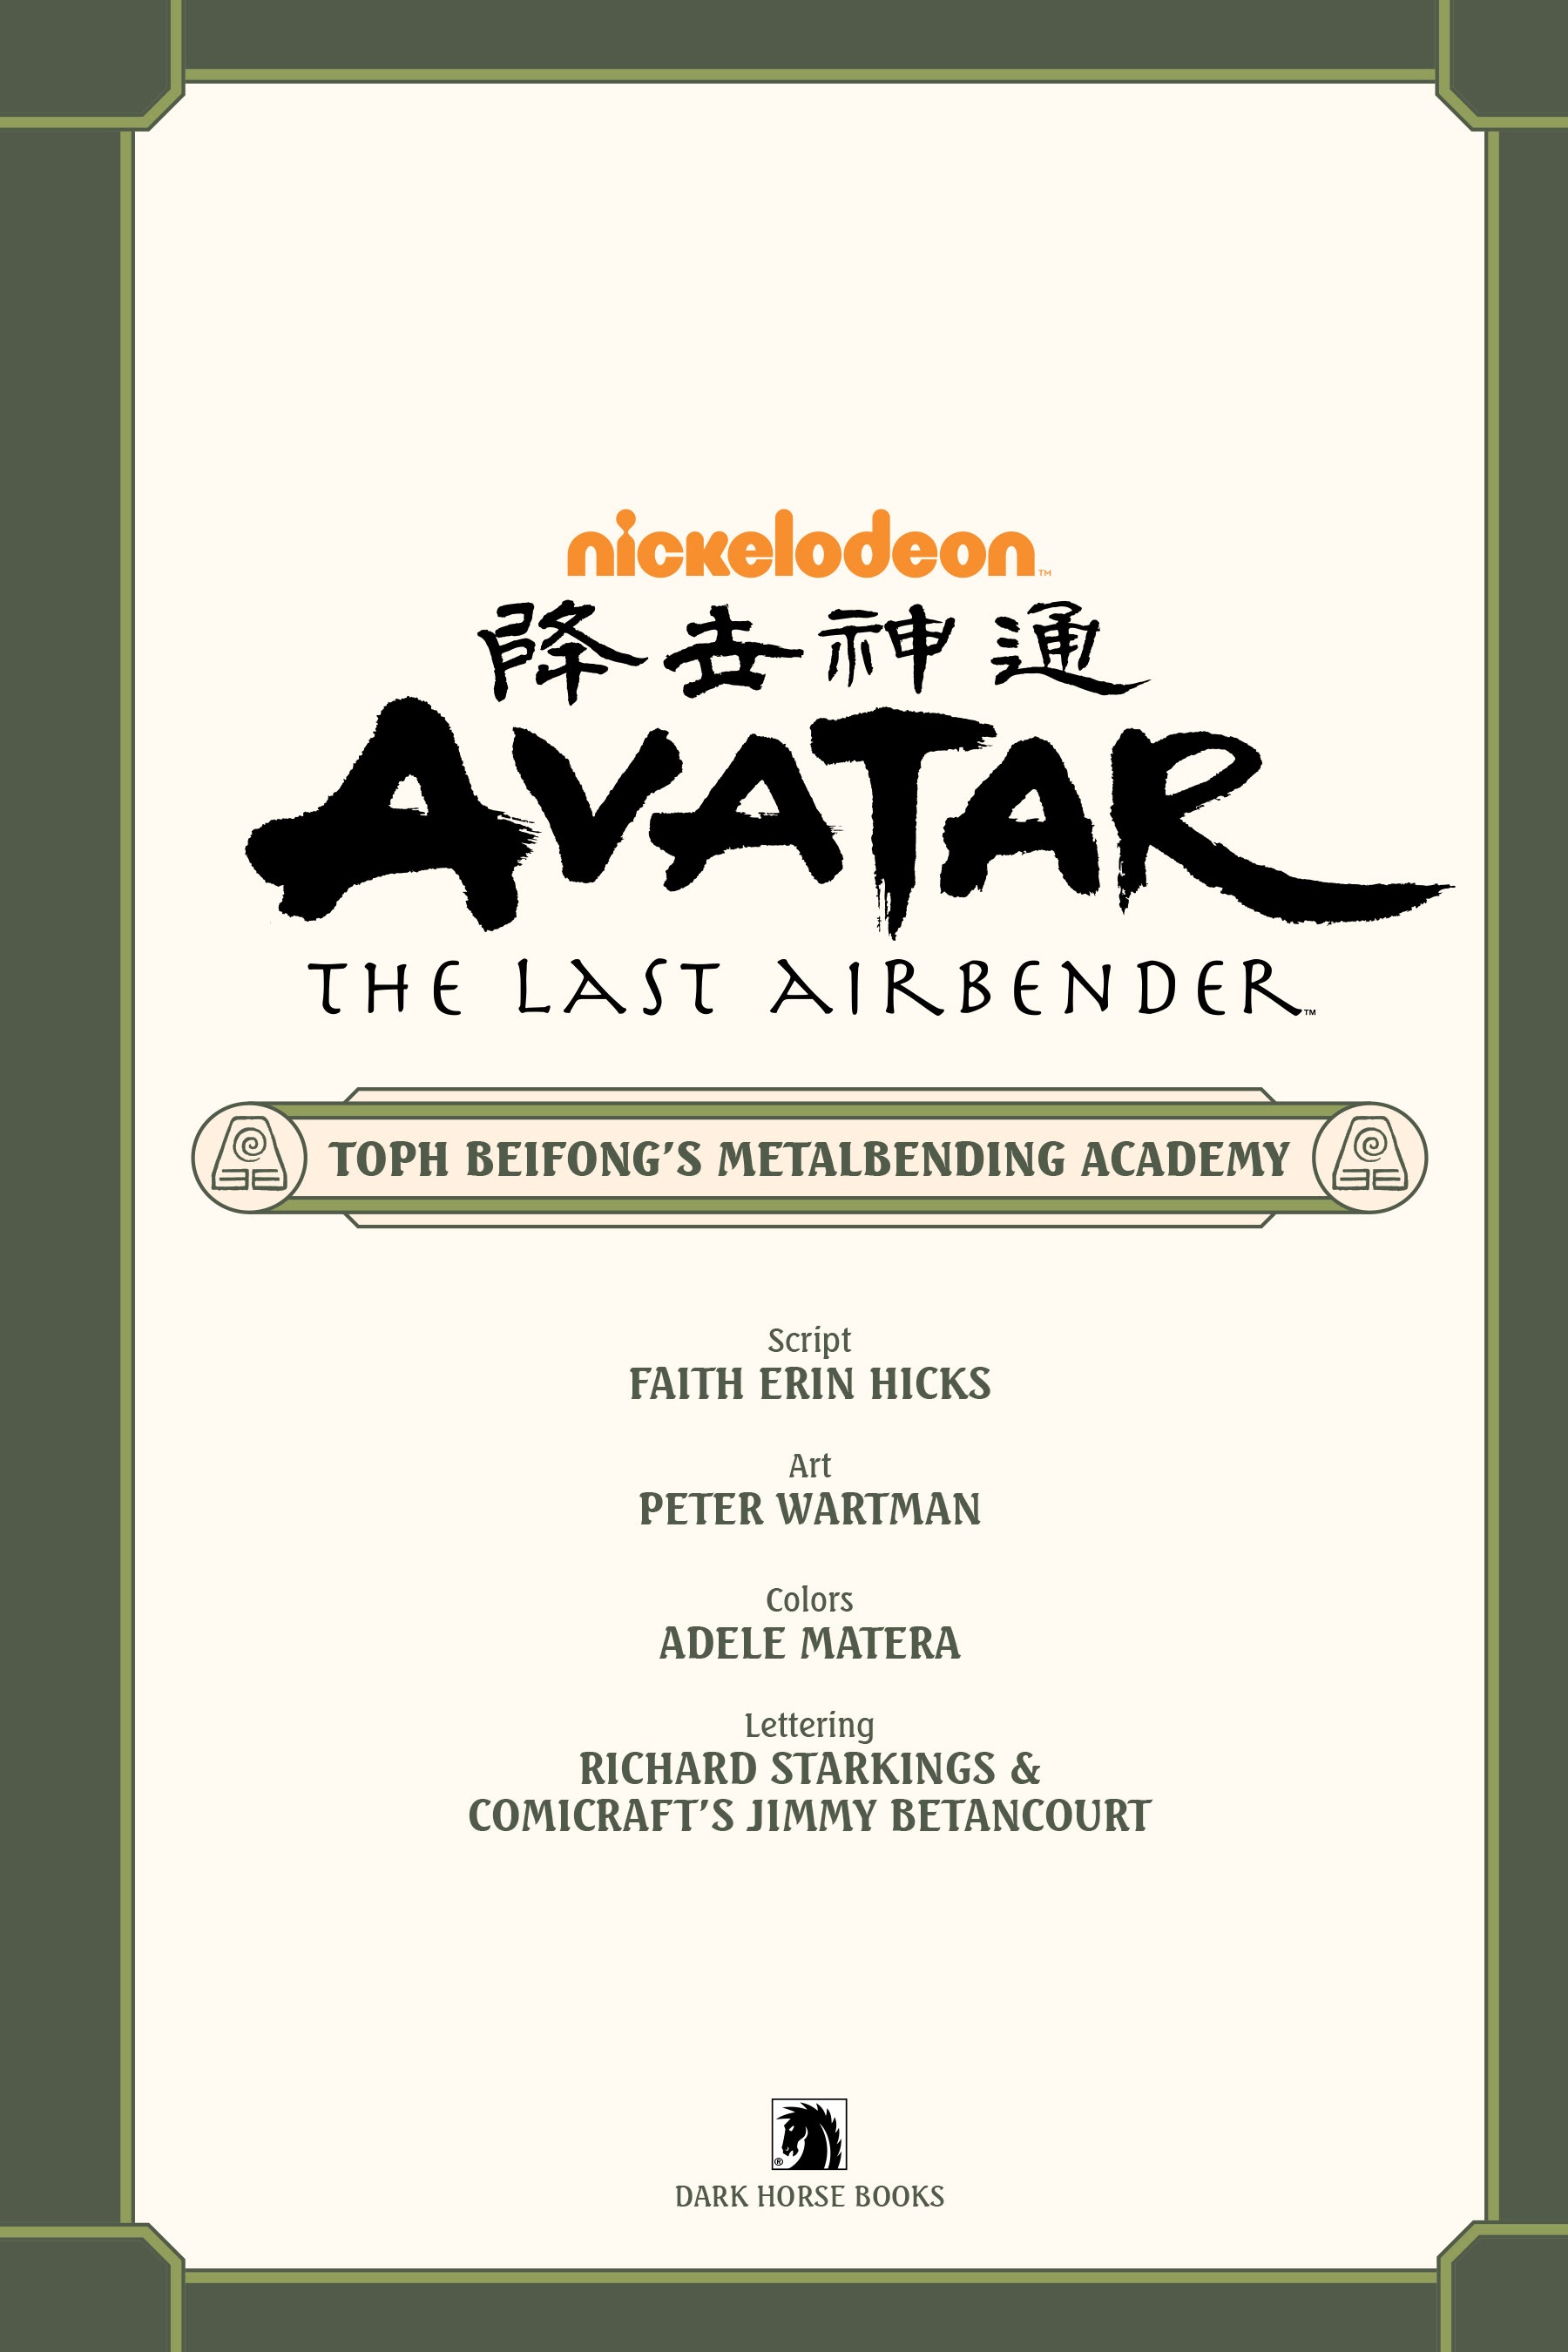 Read online Nickelodeon Avatar: The Last Airbender - Toph Beifong's Metalbending Academy comic -  Issue # TPB - 4